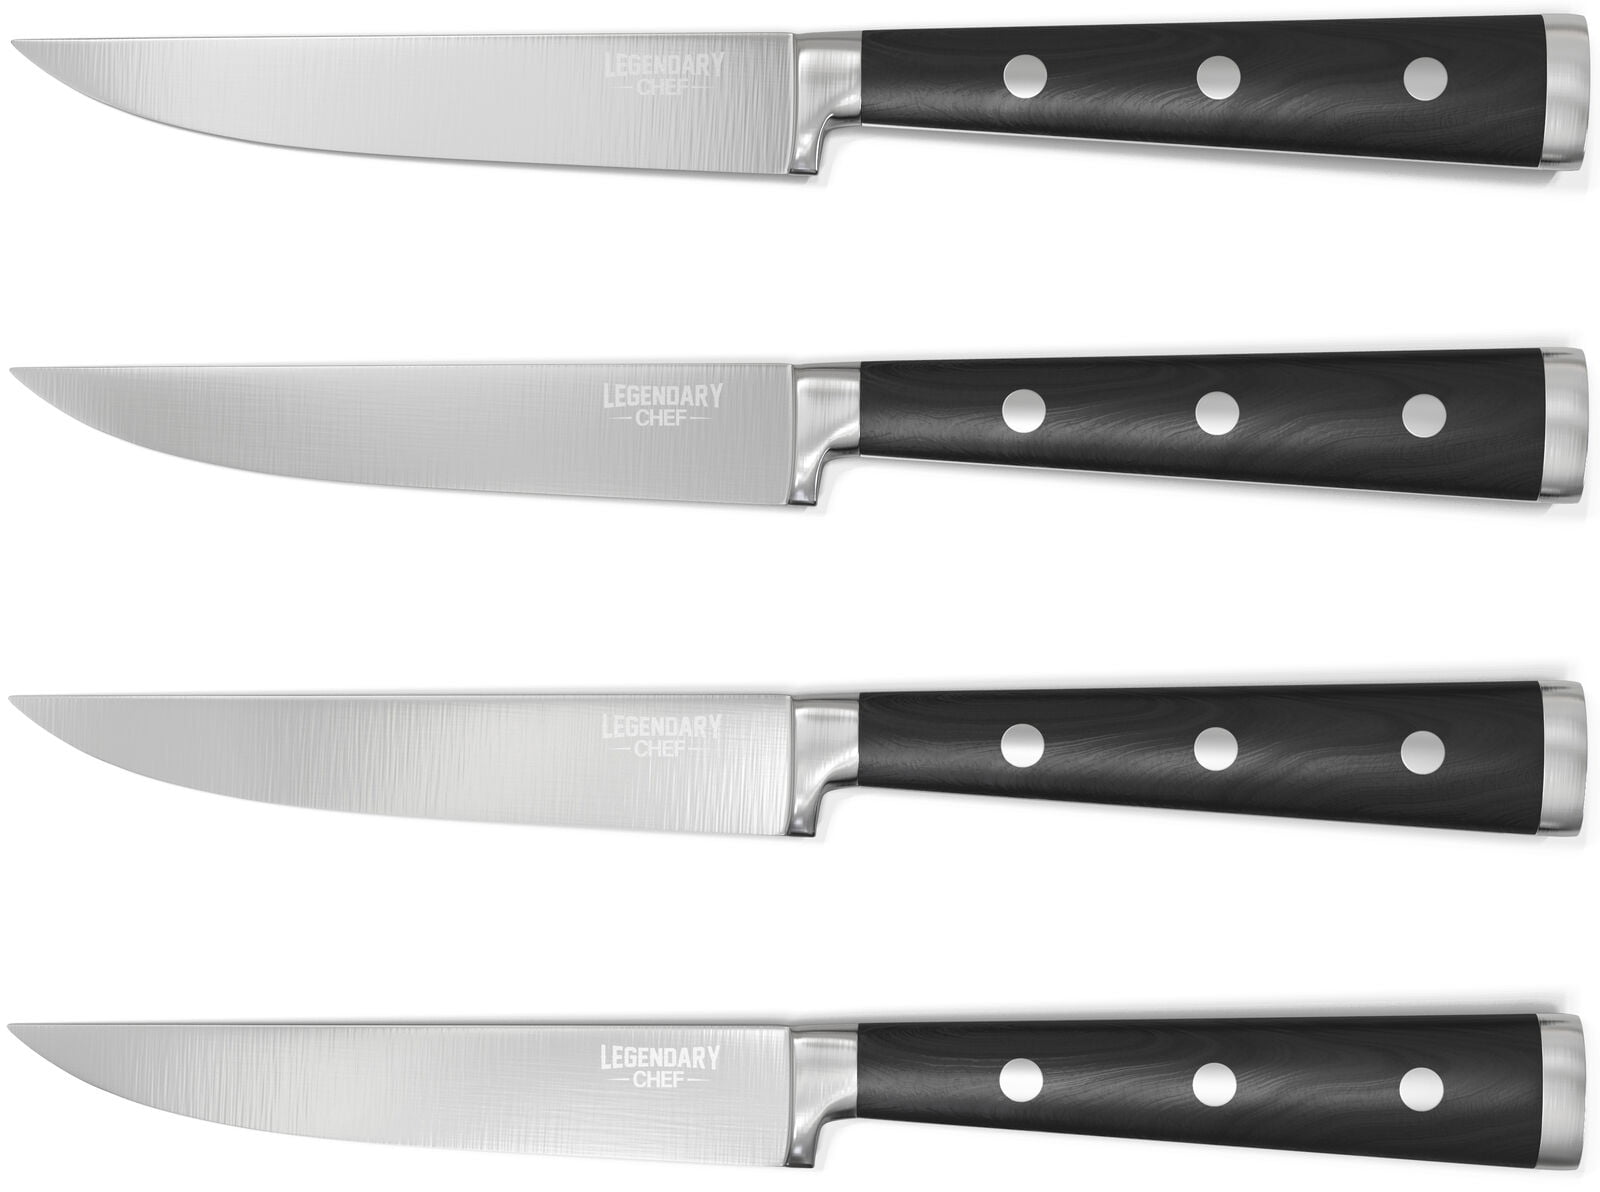  MAD SHARK Steak Knives Set of 4, Premium 4.5-inch Serrated  Steak Knife Set, Ultra Sharp German High Carbon Stainless Steel Triple  Rivet Collection 4-Piece Kitchen Steak Knife Set with Gift Box